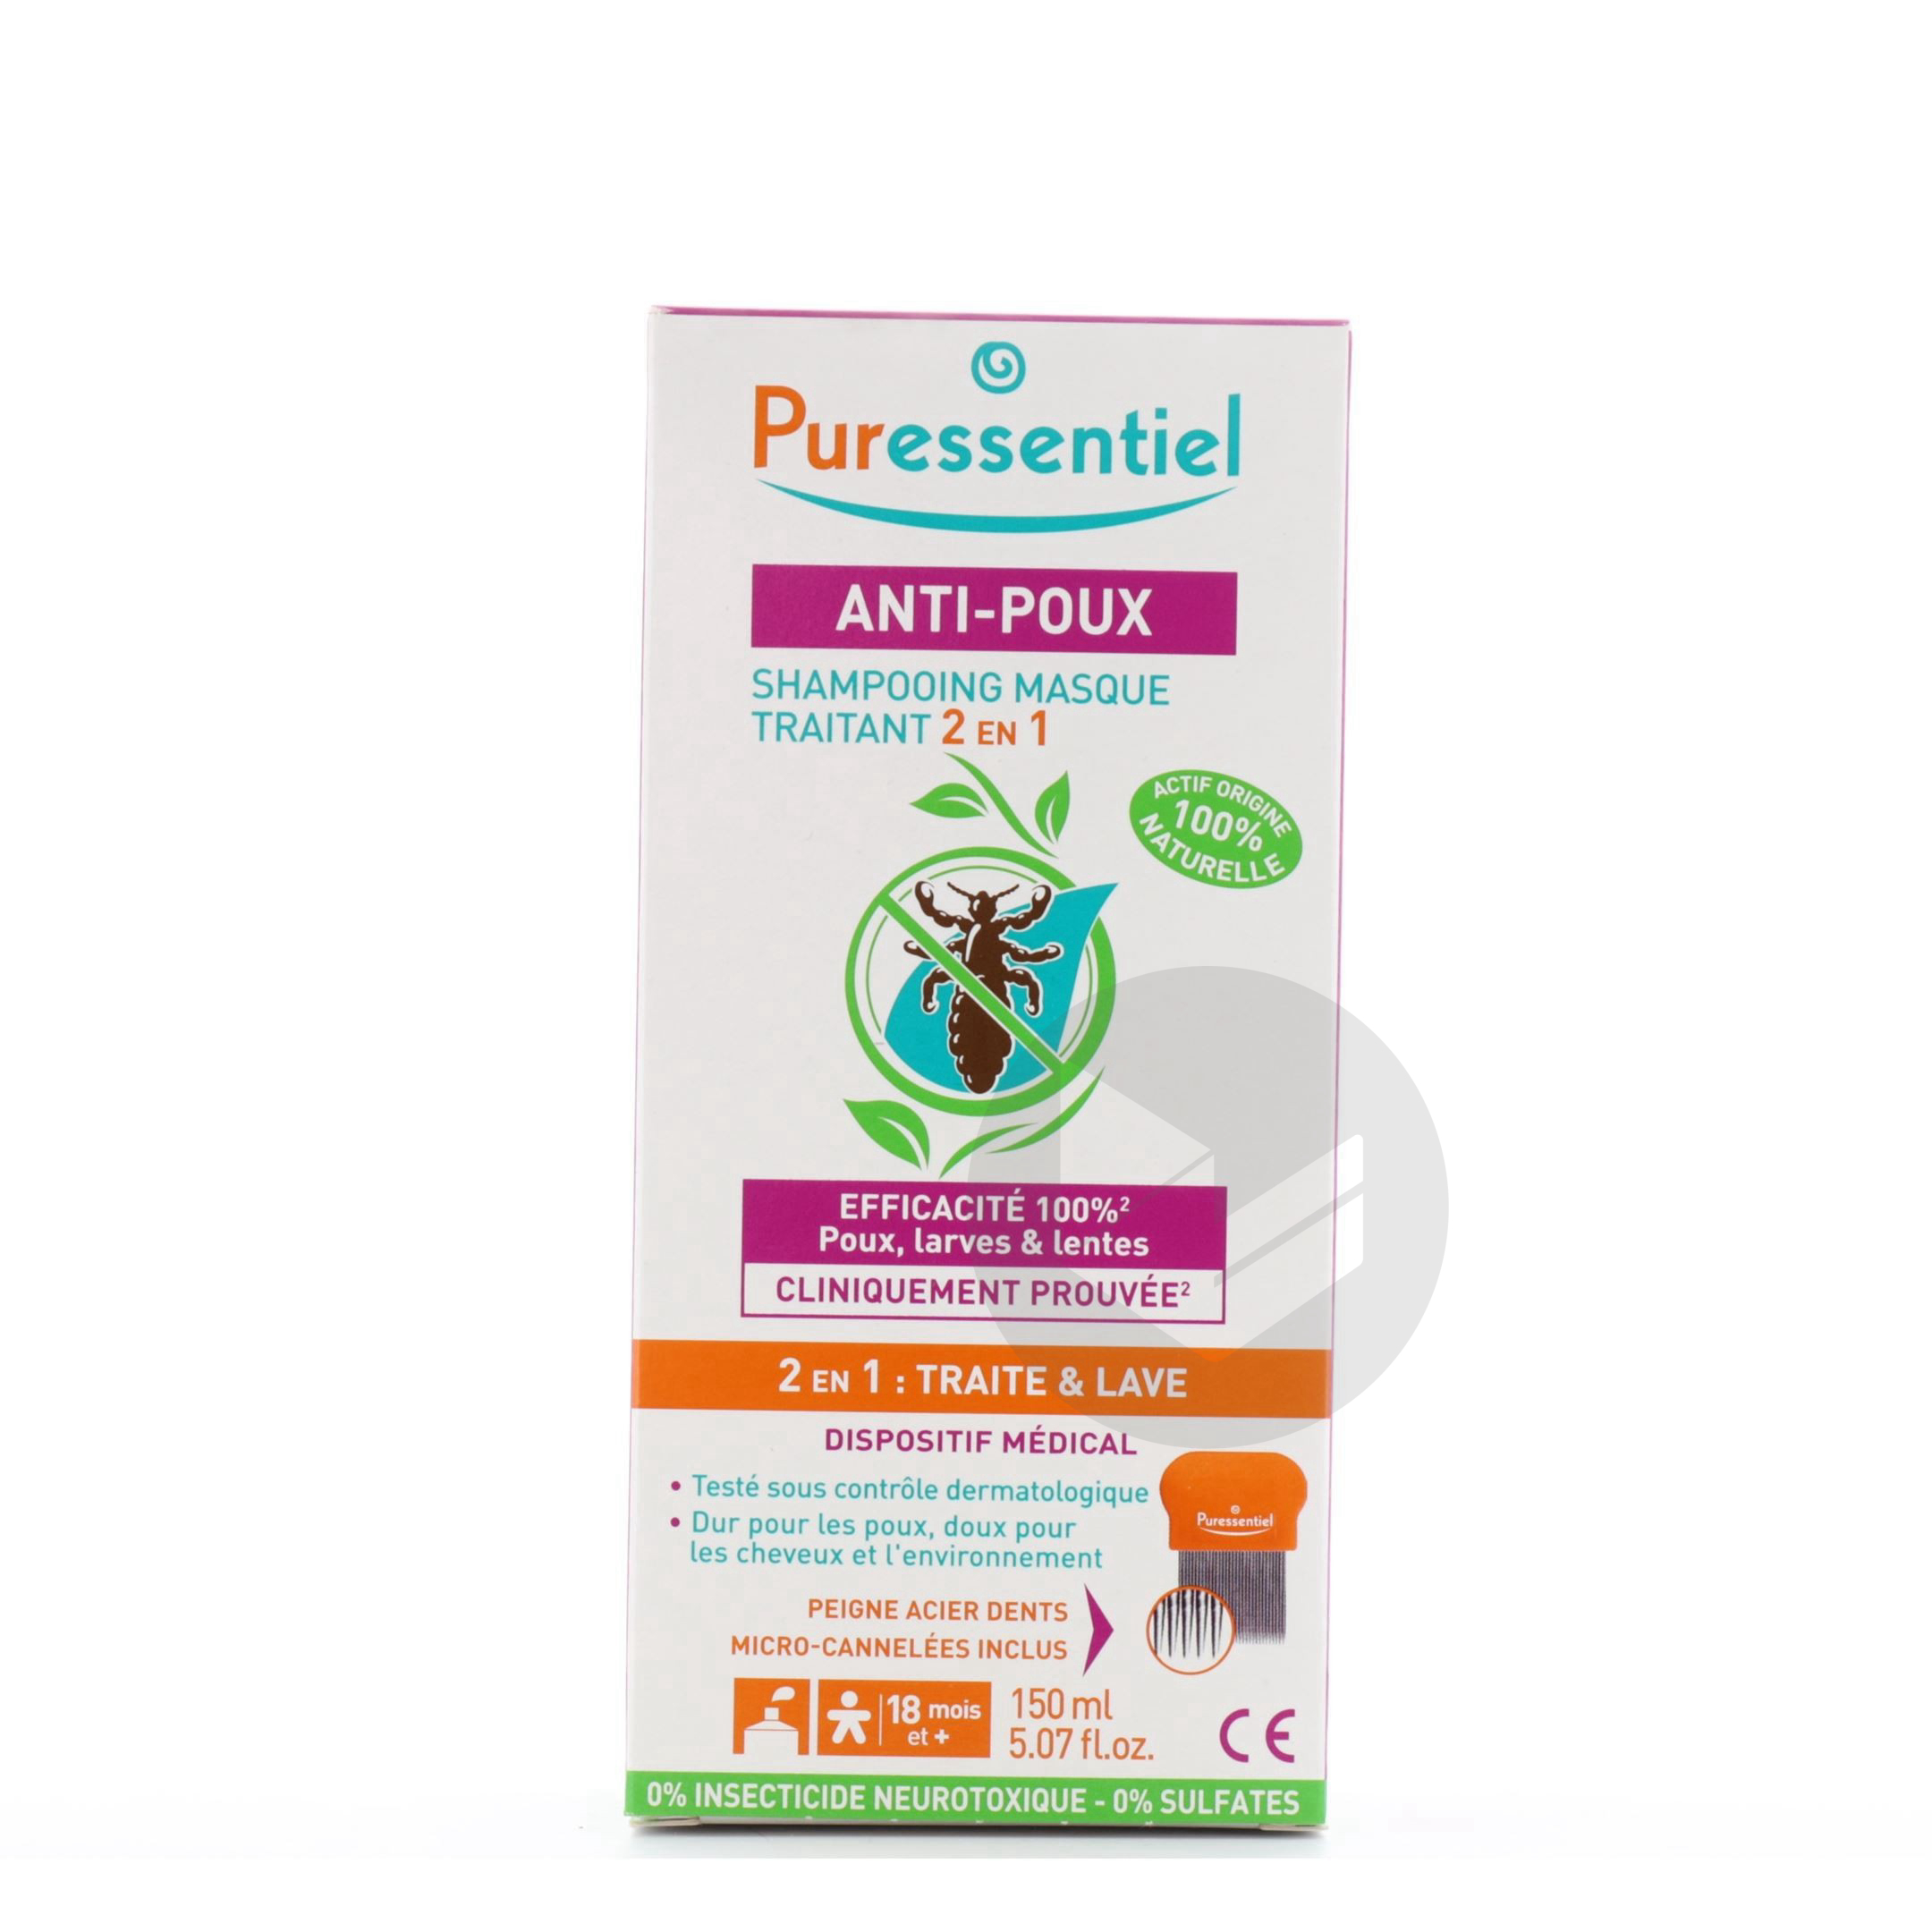 Puressentiel anti-poux shampooing masque traitant 2 en 1 150ml